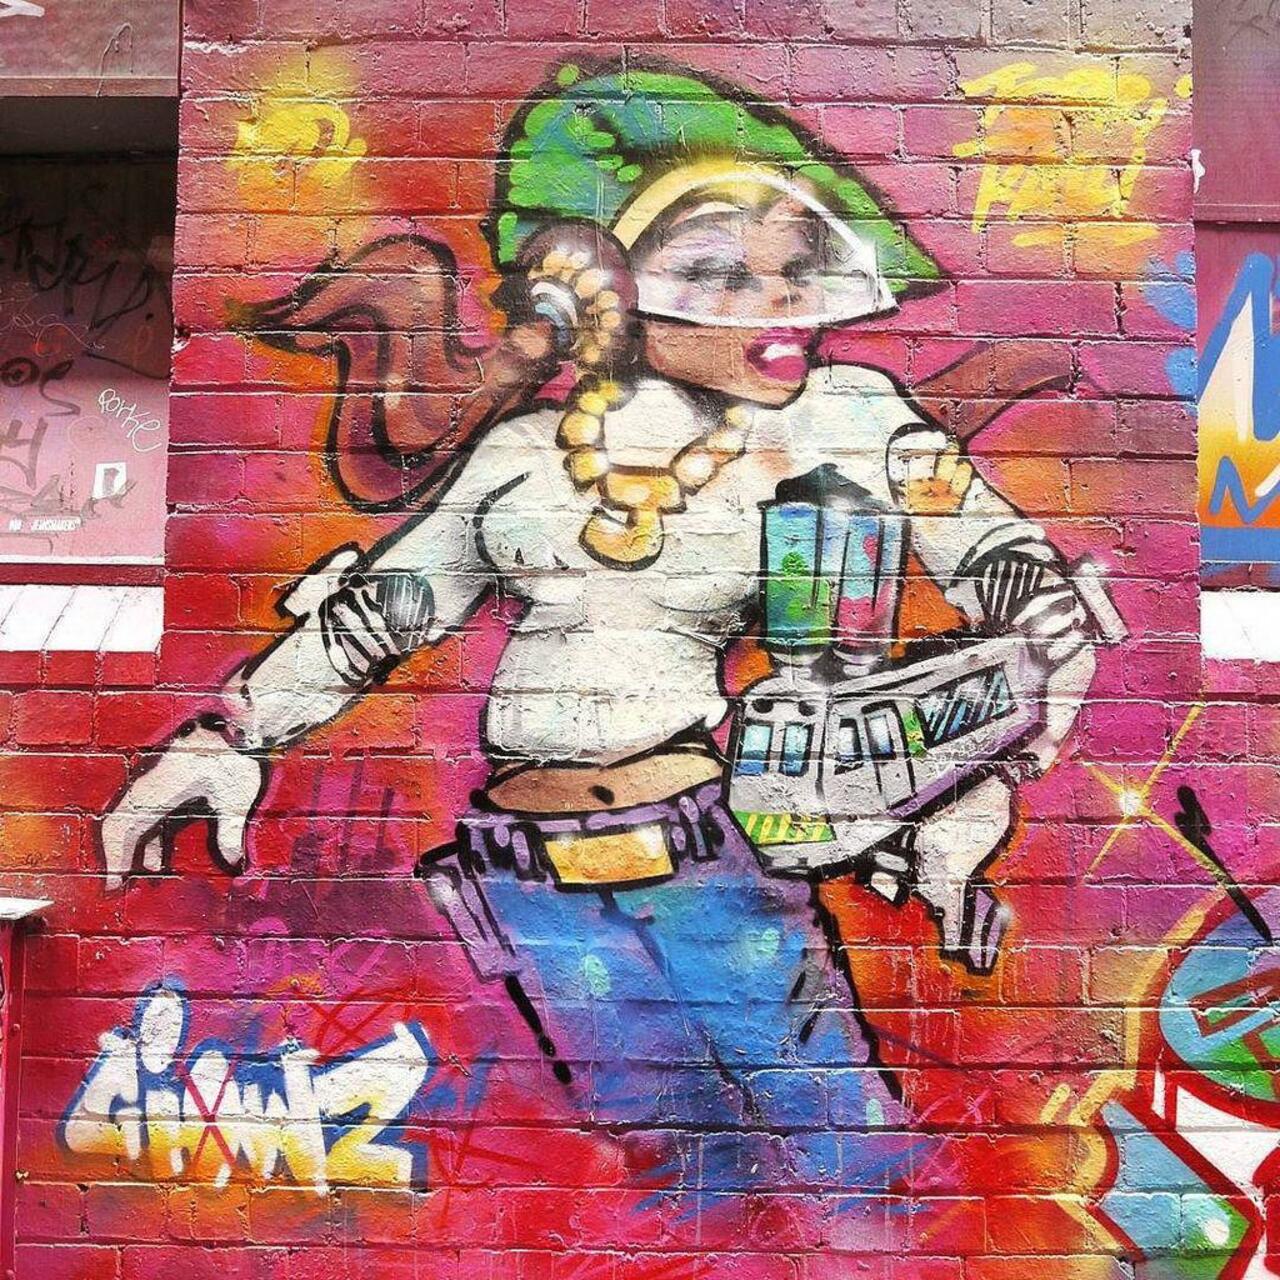 RT @StArtEverywhere: #streetart #urbanart #graffiti #graff #streetartmelbourne #streetartofficial #instagraffiti #melbourne #urbanex #ur… http://t.co/NmrUIAVoDt